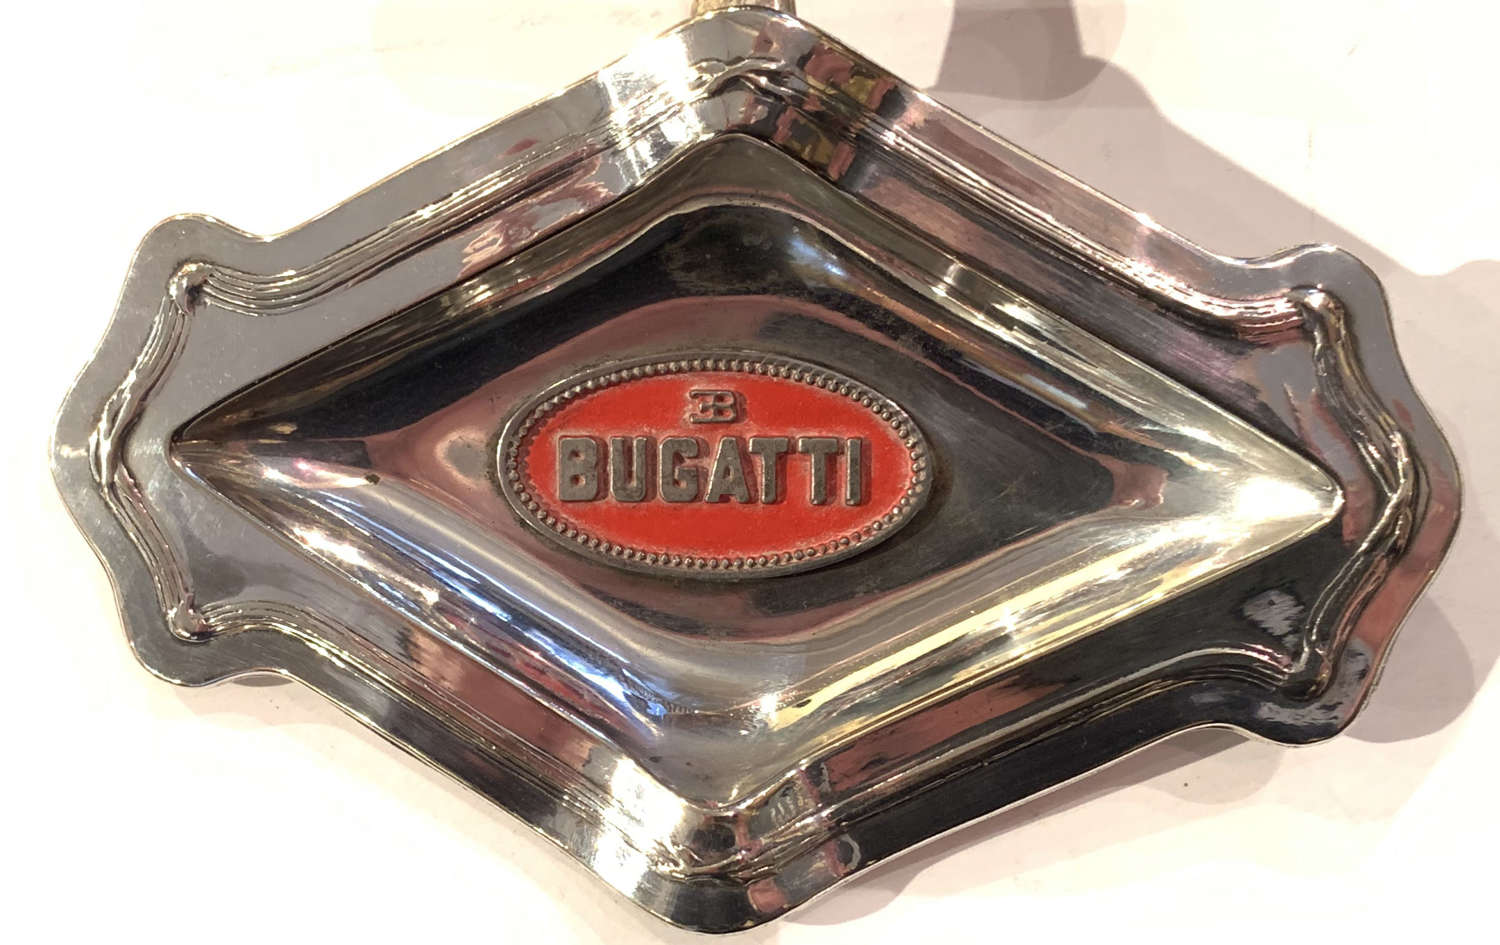 An original Bugatti Motor car ashtray, circa 1930